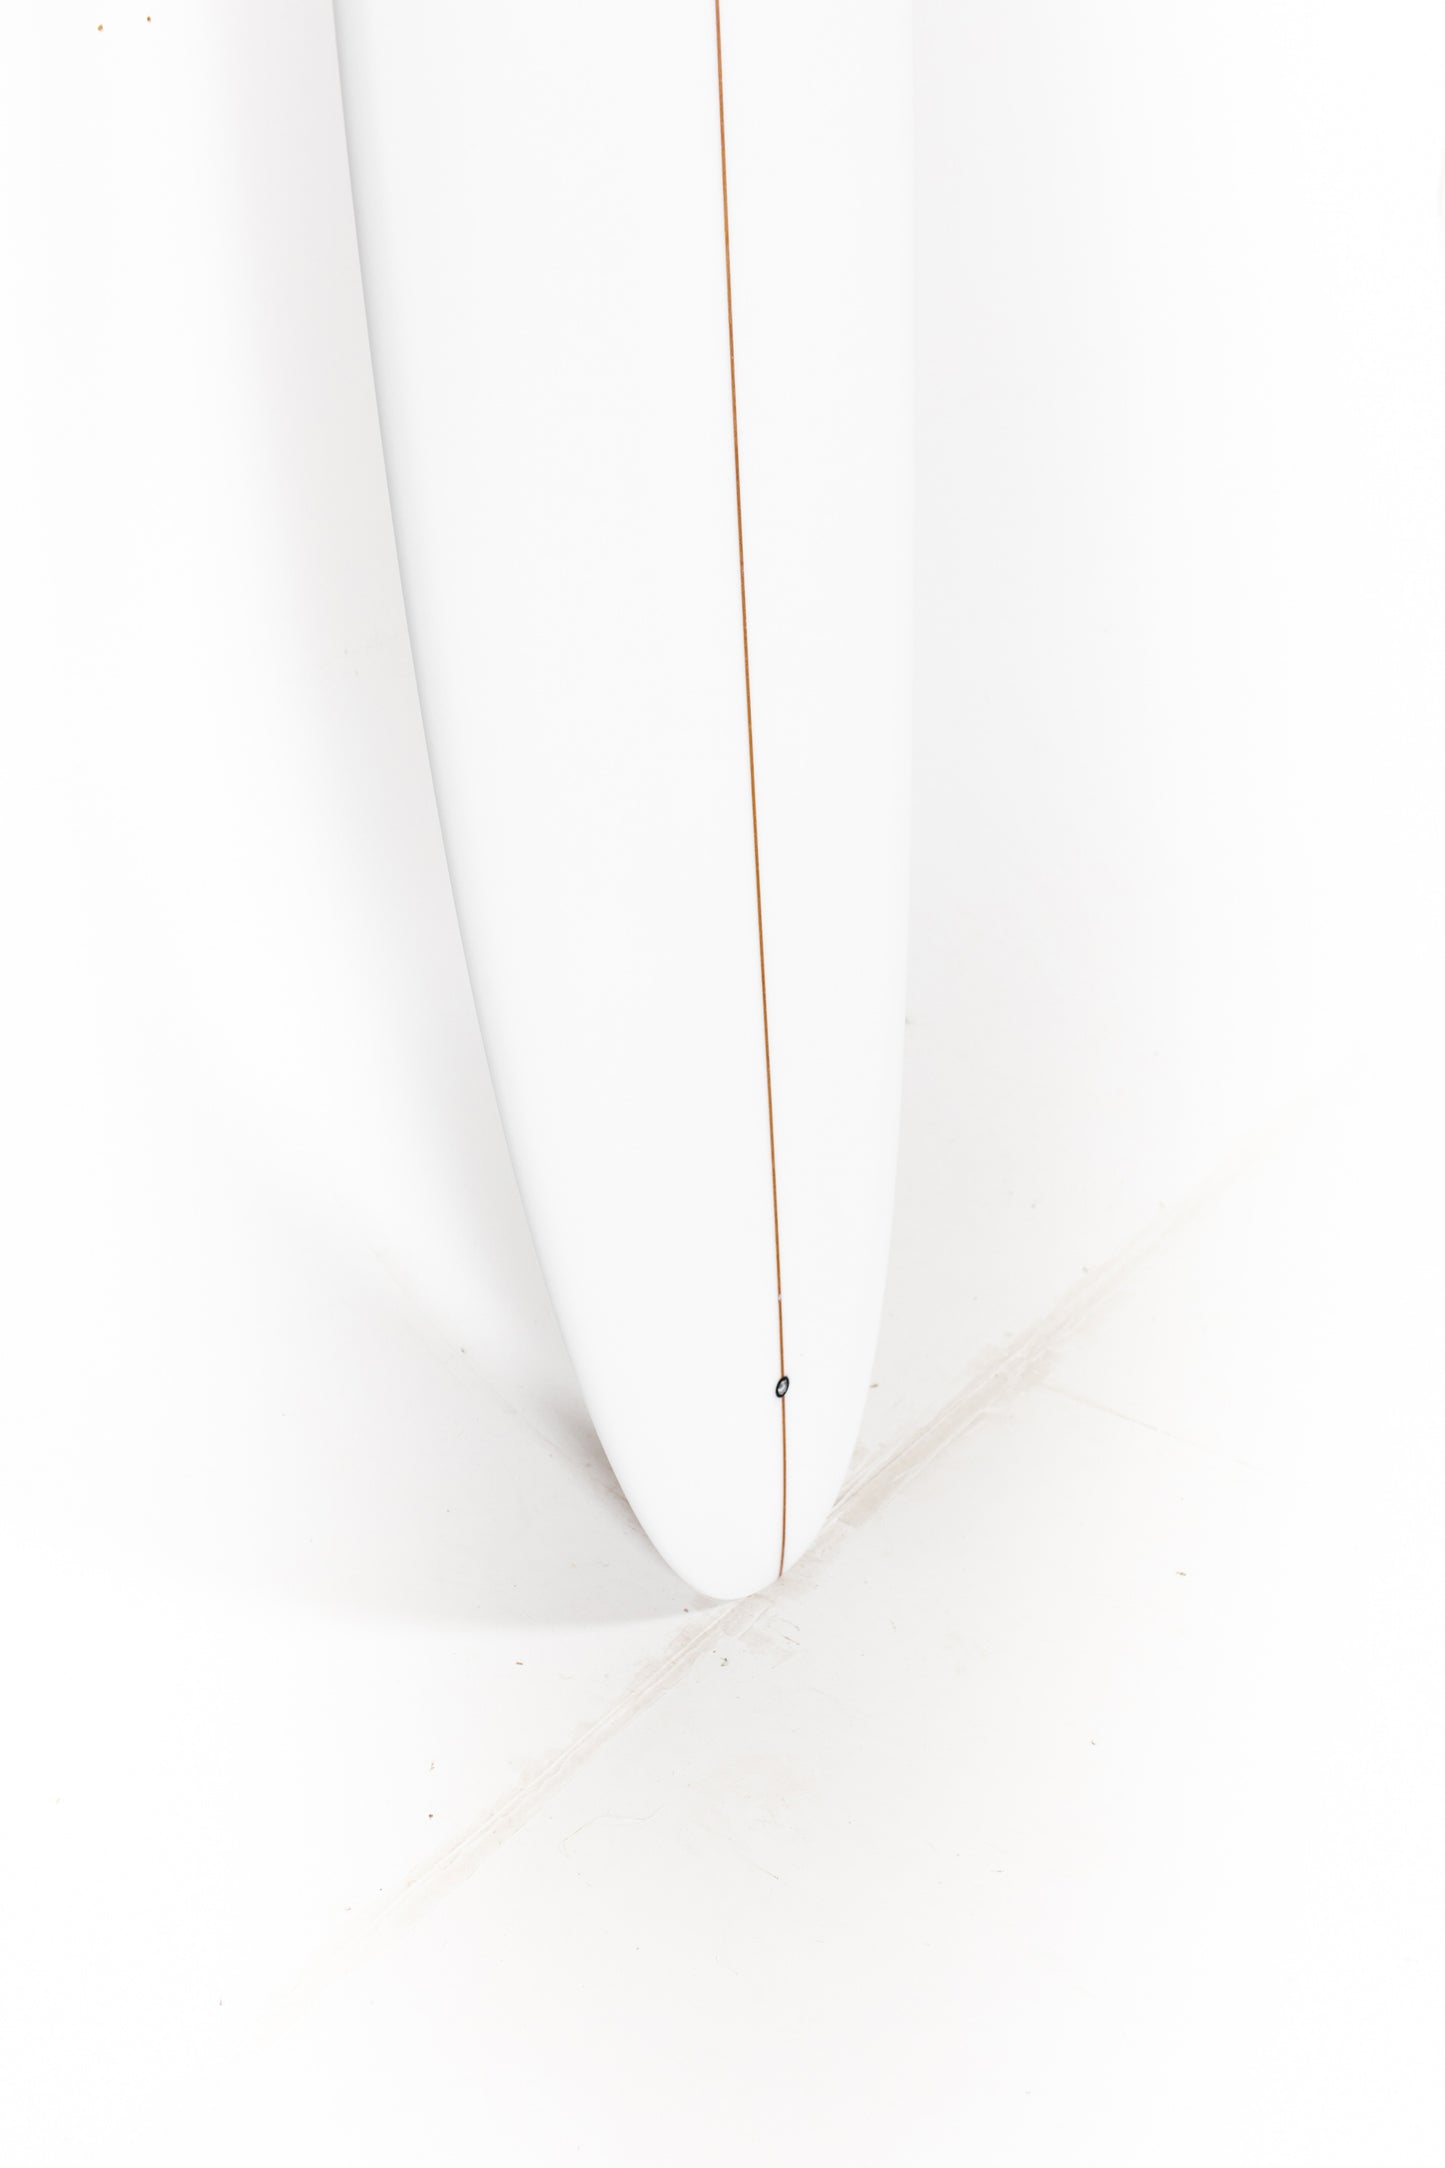 
                  
                    Pukas Surf Shop - McTavish Surfboard - RINCON by Bob McTavish - 7’2” x 21 x 2 7/8 - Ref BM00775
                  
                